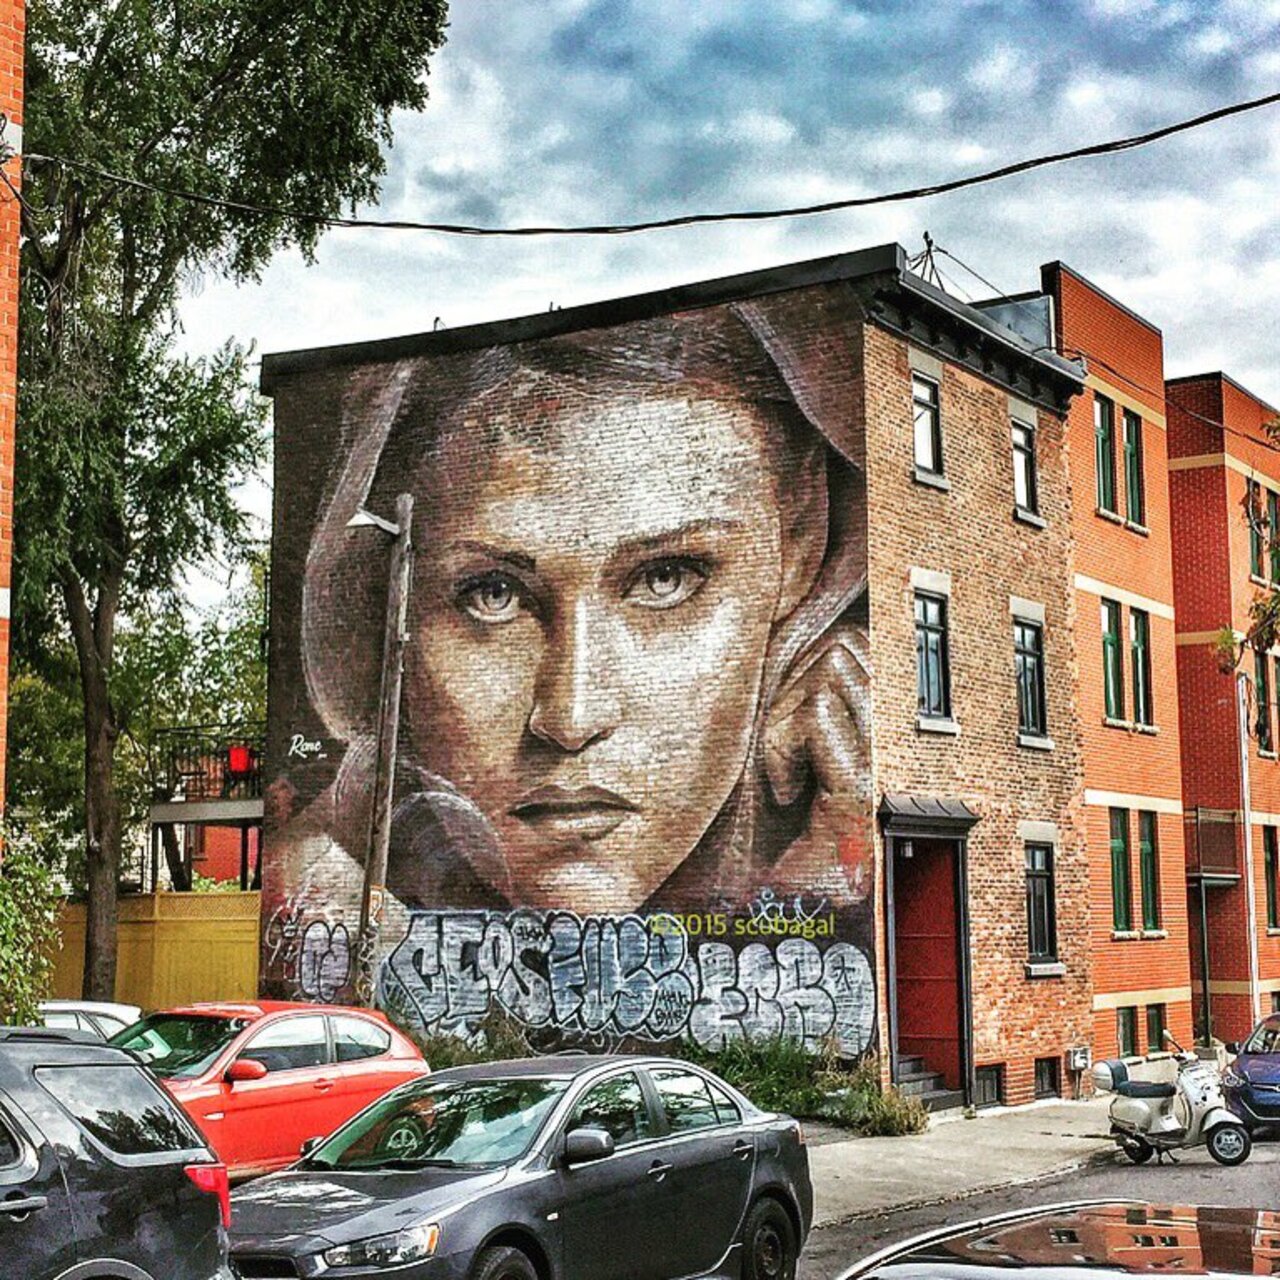 The Walkflower | #Montreal #art #graffiti #streetart #streetphotography https://t.co/aKj7ch3ruu